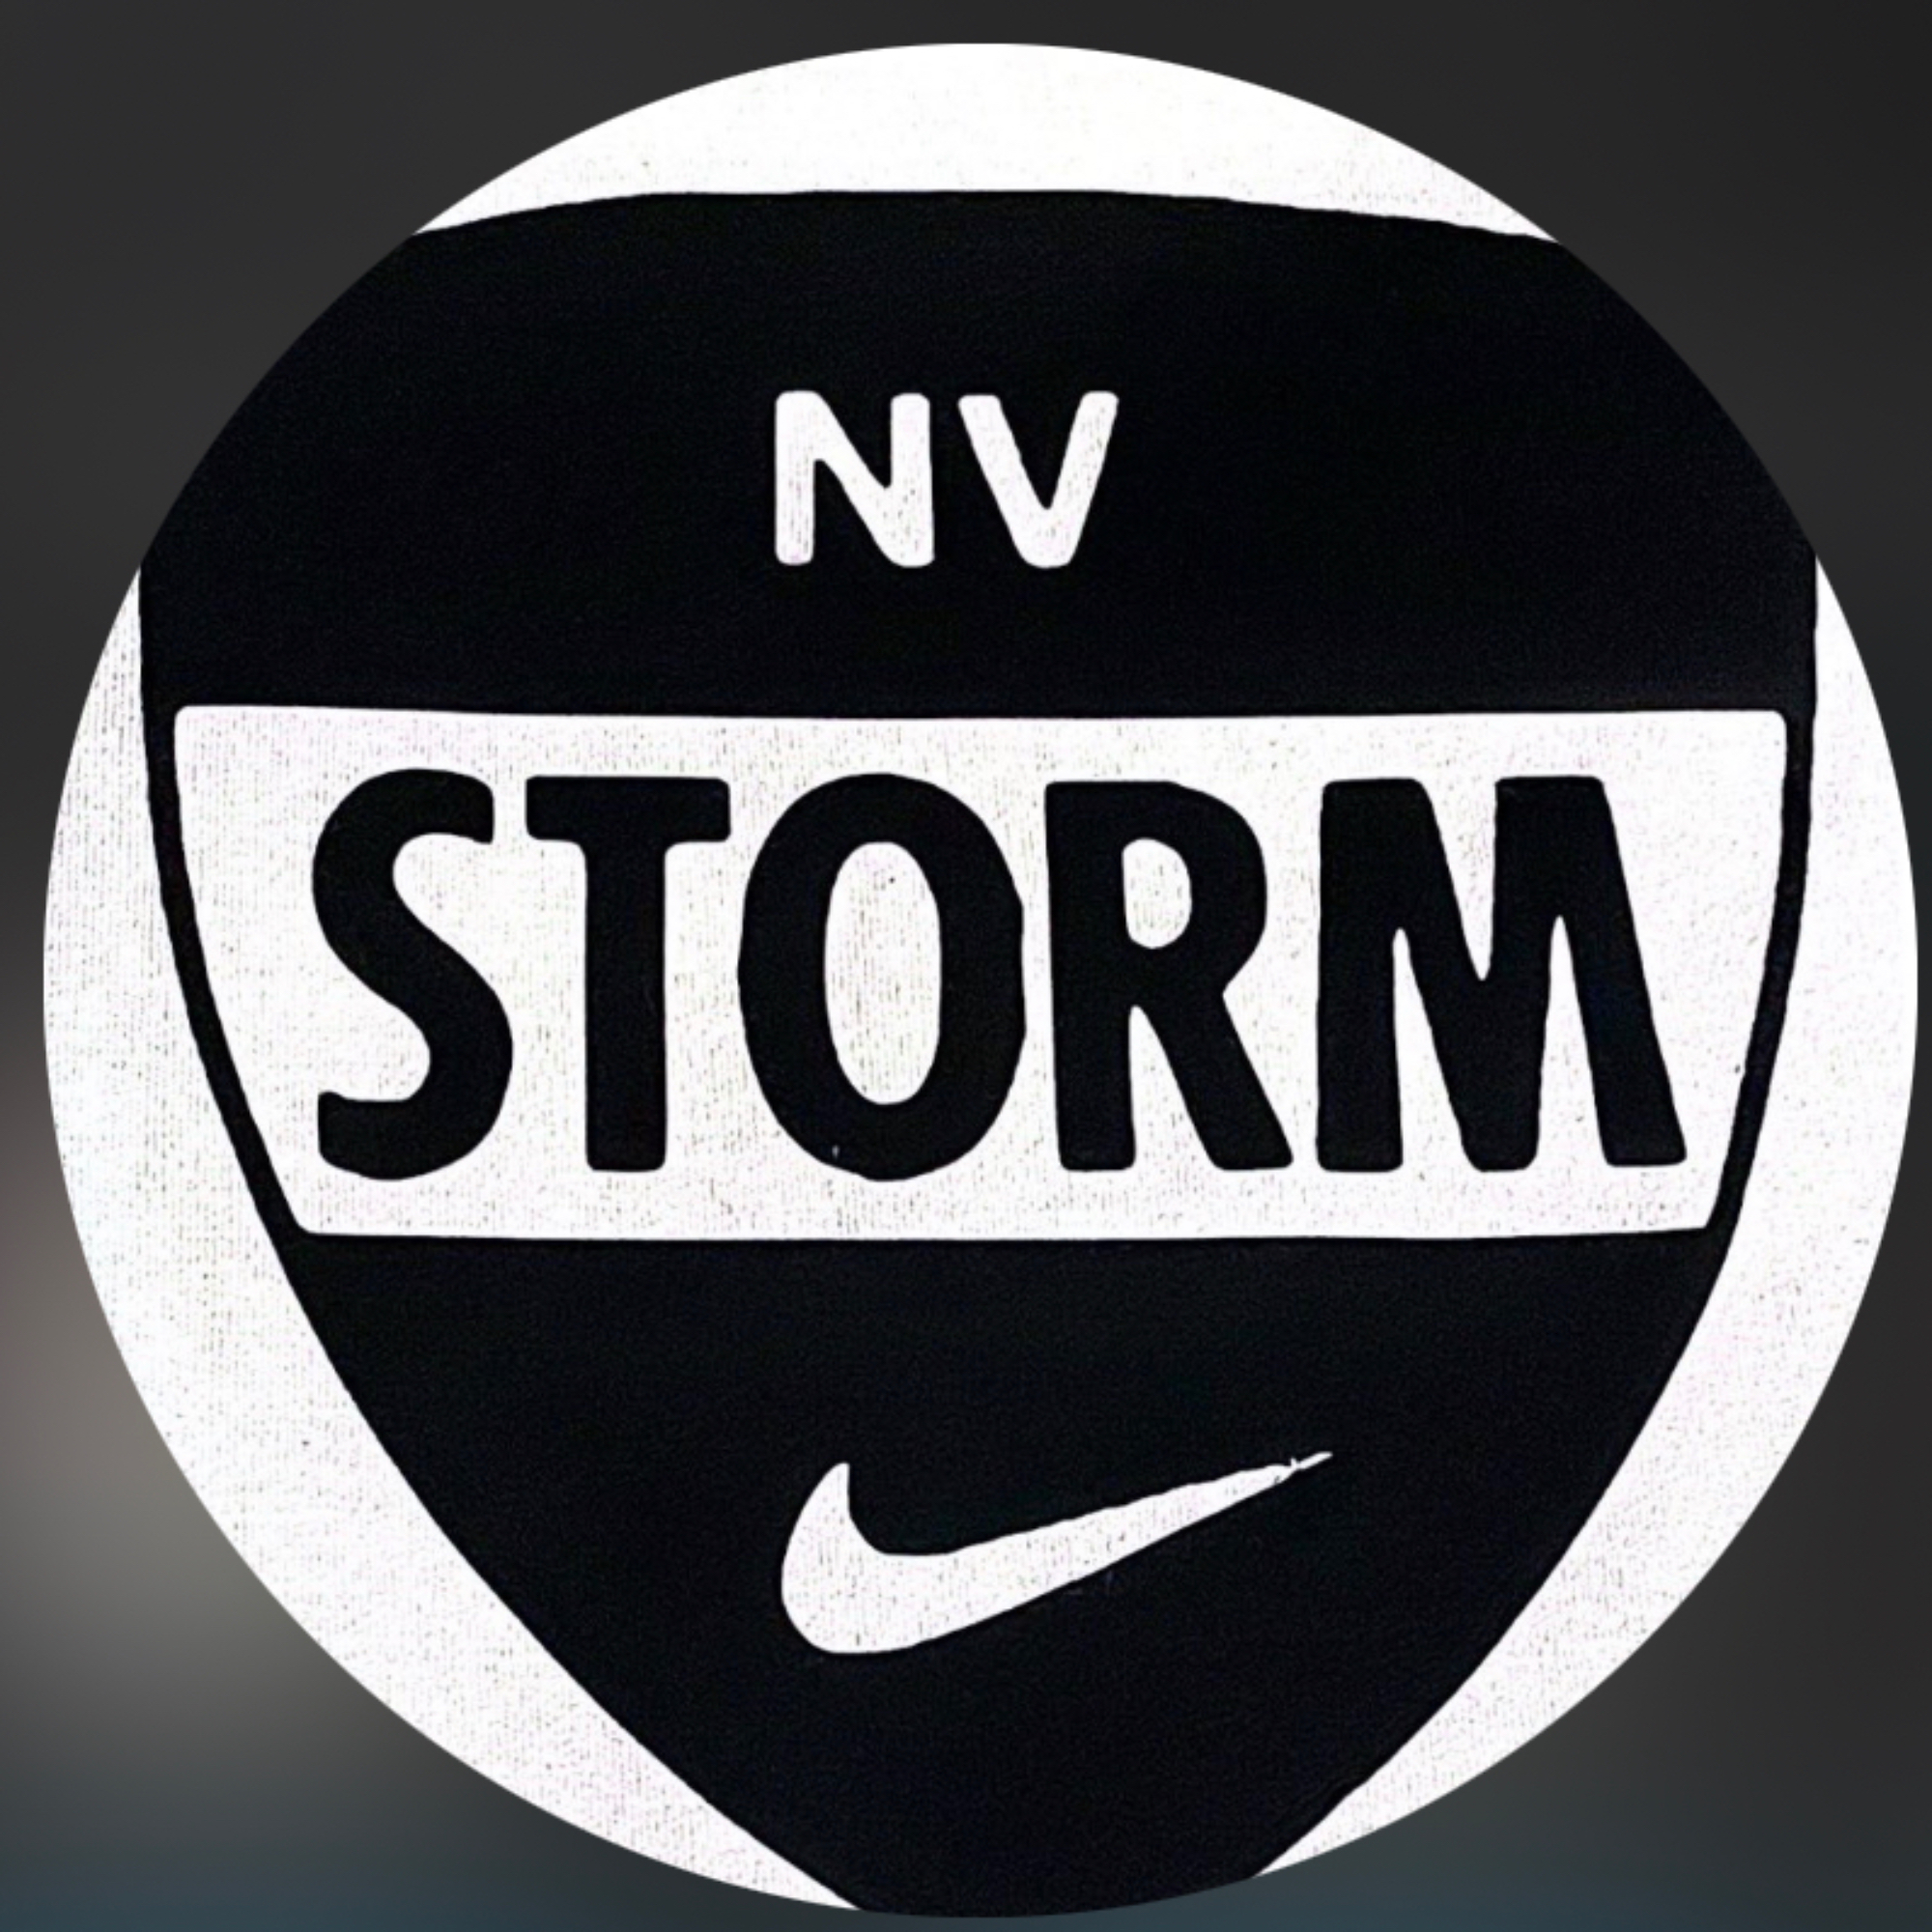 Organization logo for Storm Nike NV